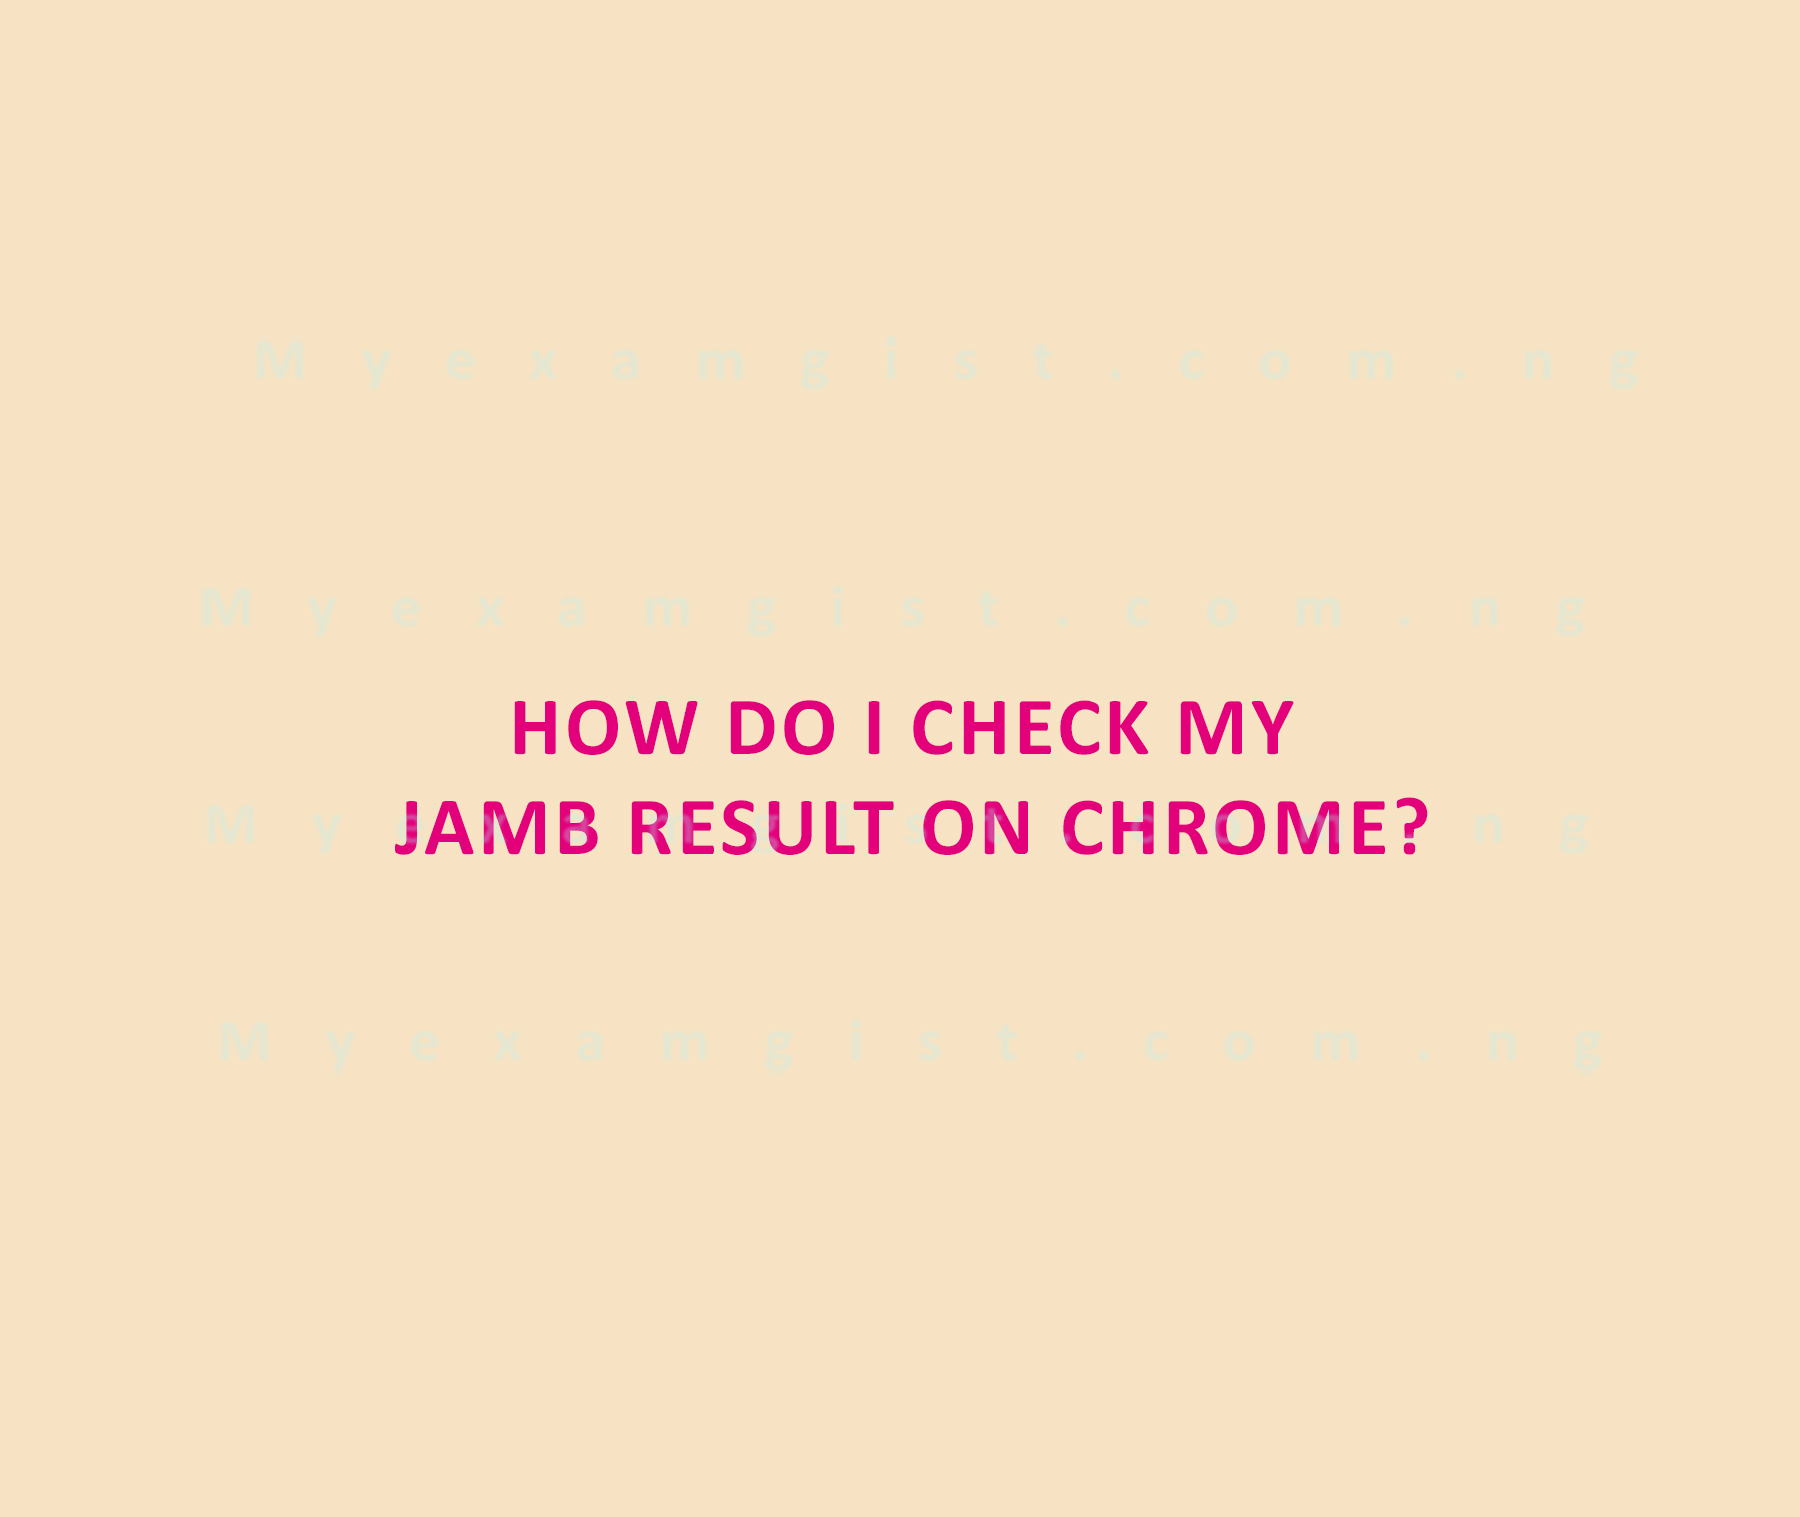 How do I check my JAMB result on Chrome?